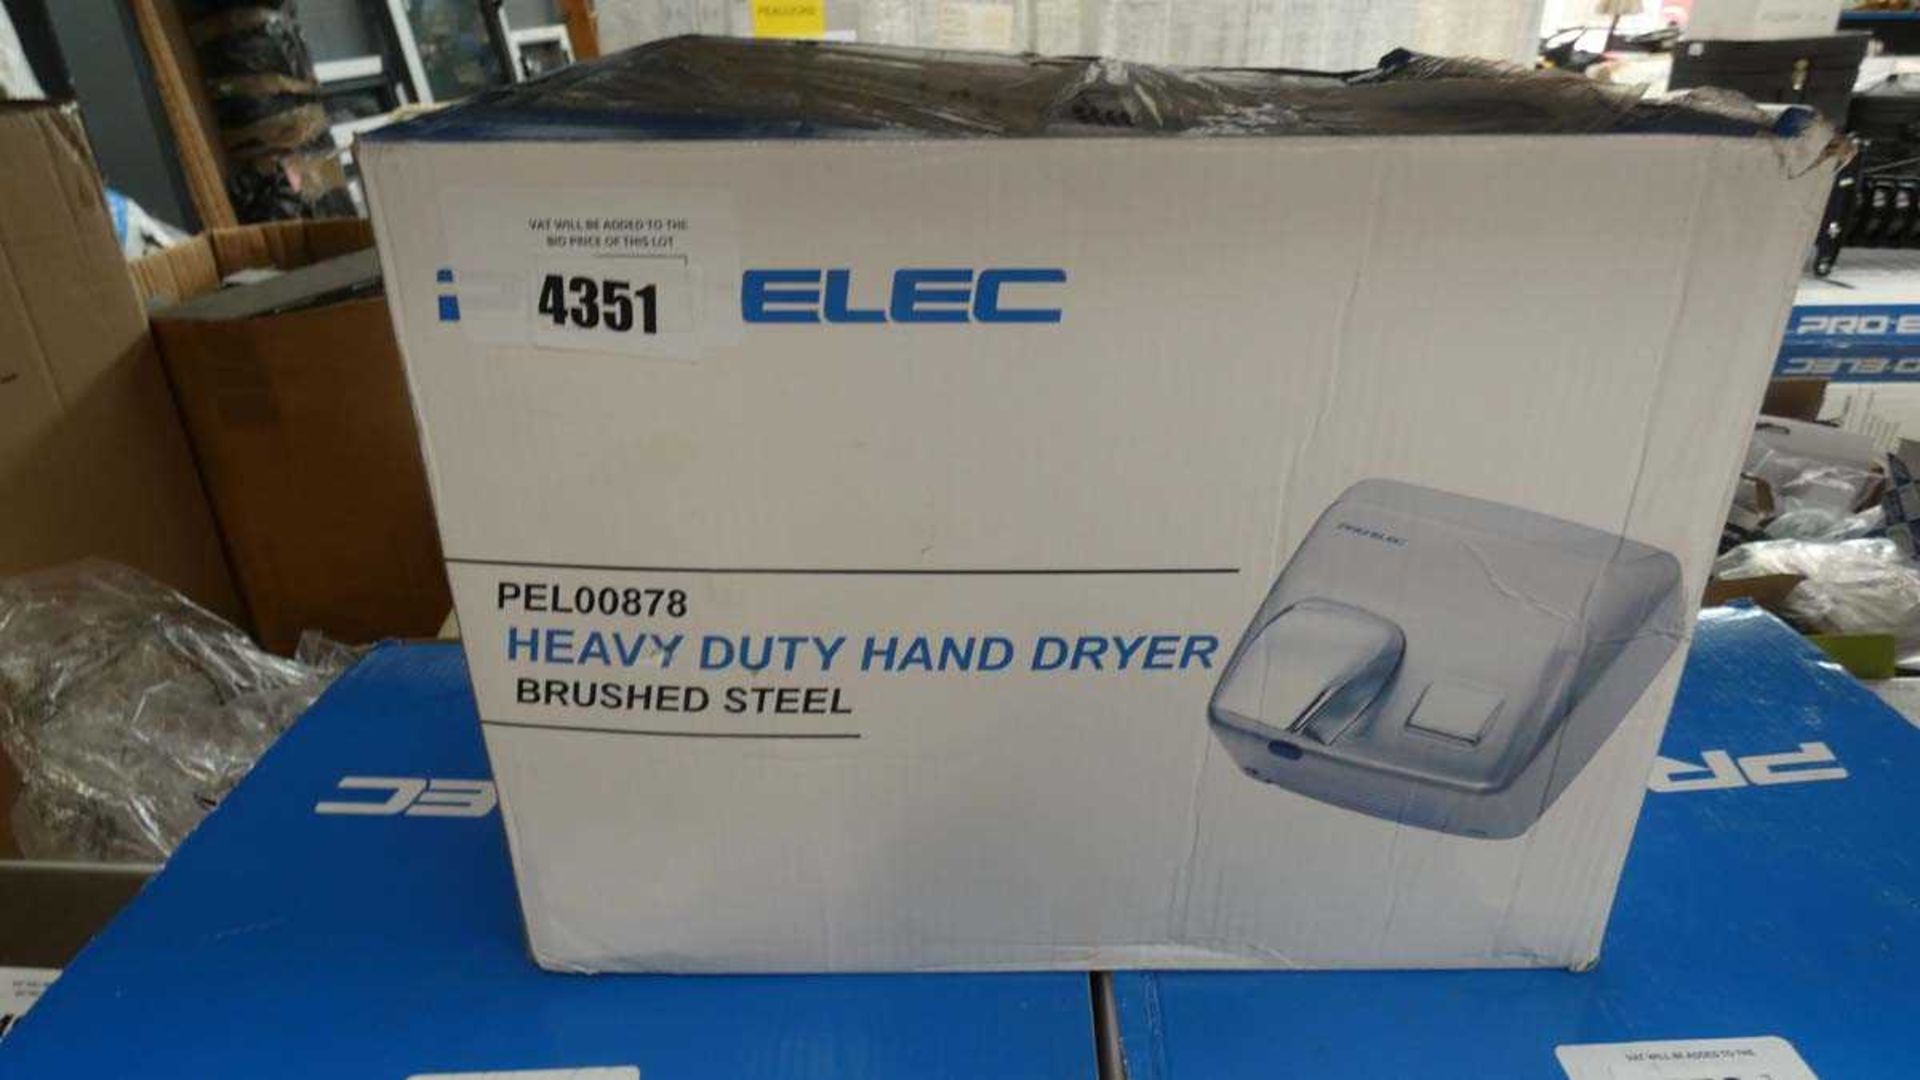 +VAT Boxed Pro Elec heavy duty hand dryer